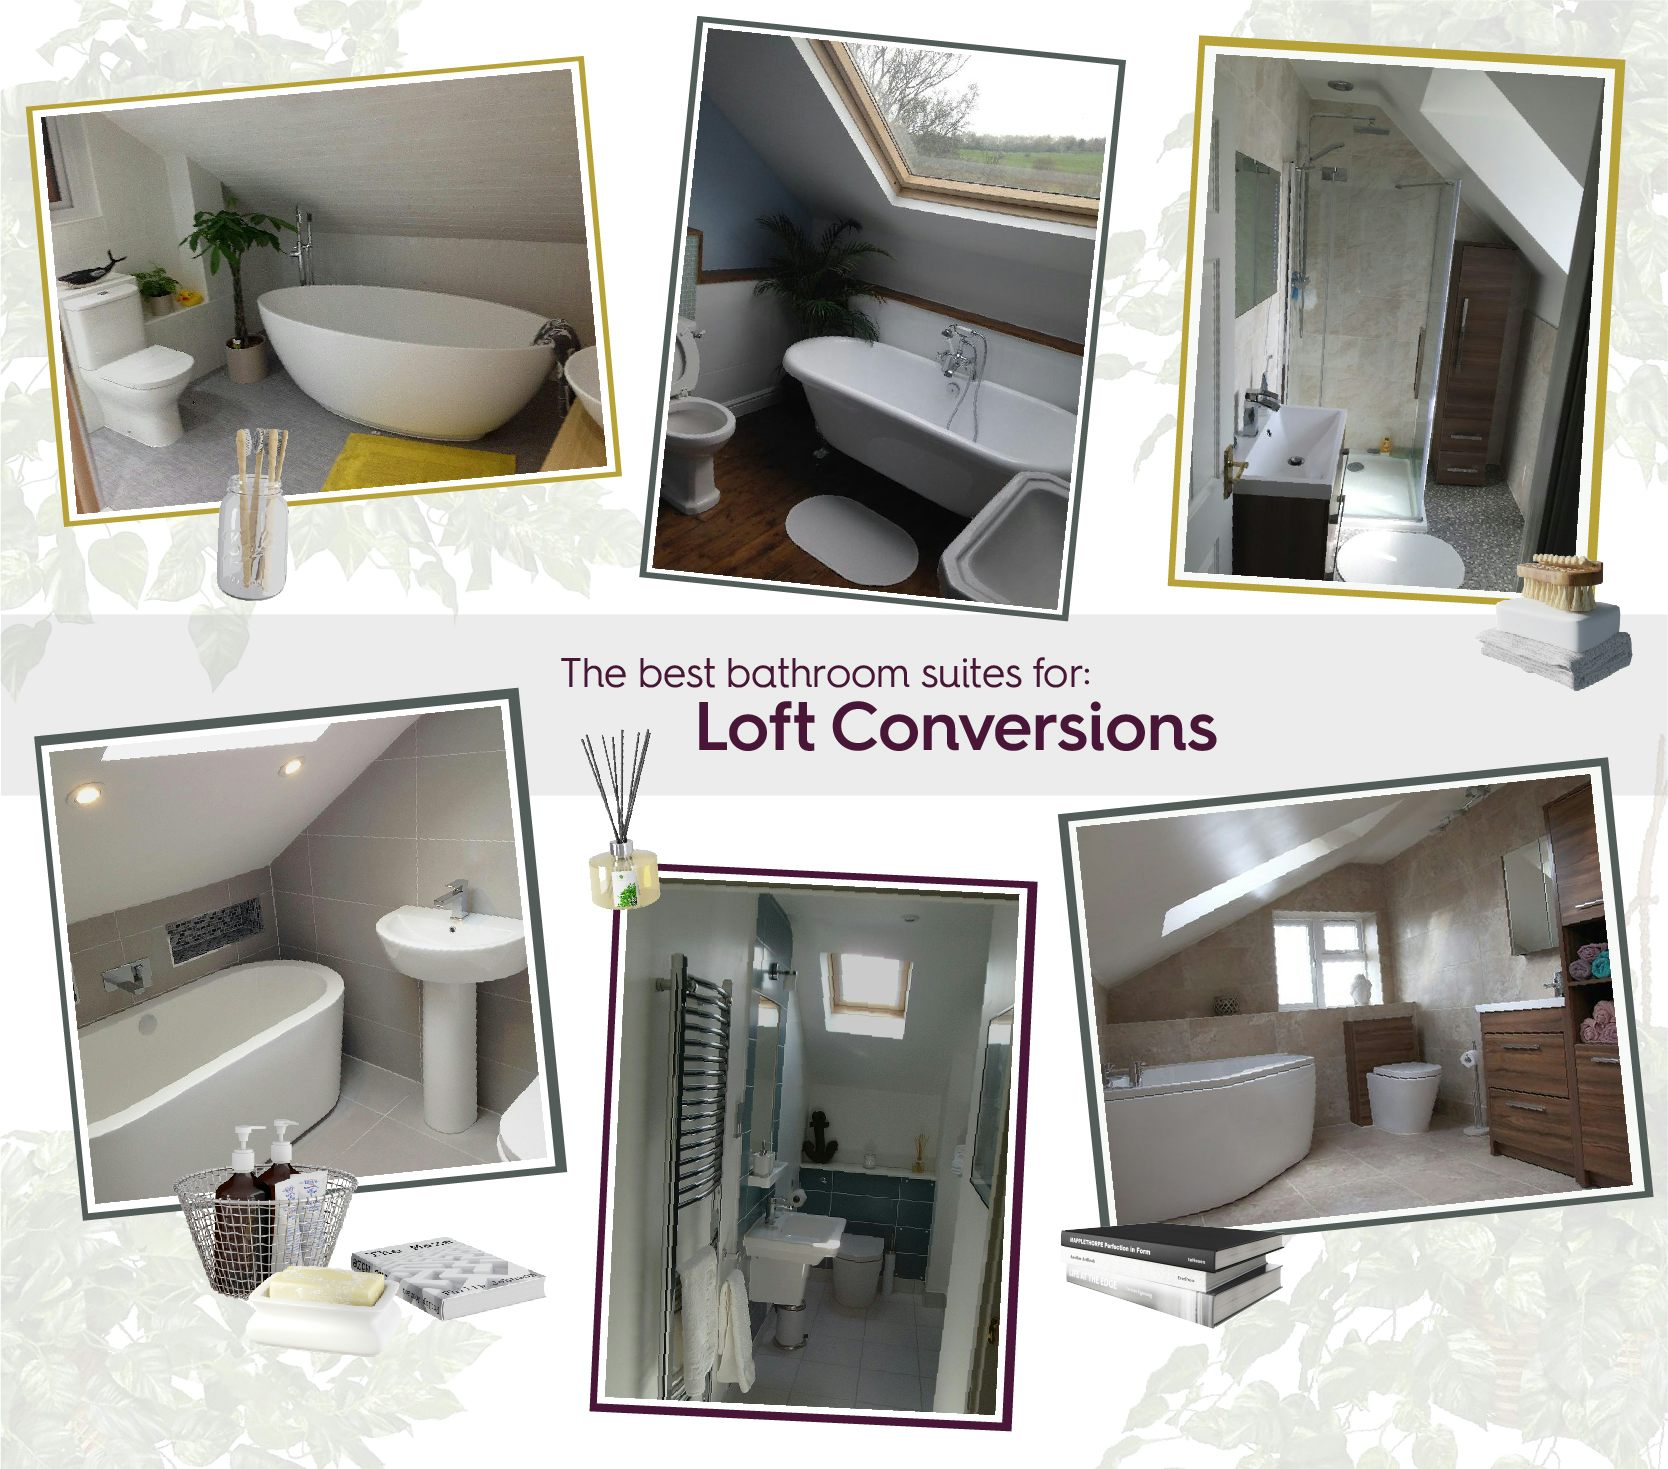 The best bathroom suites for loft conversions